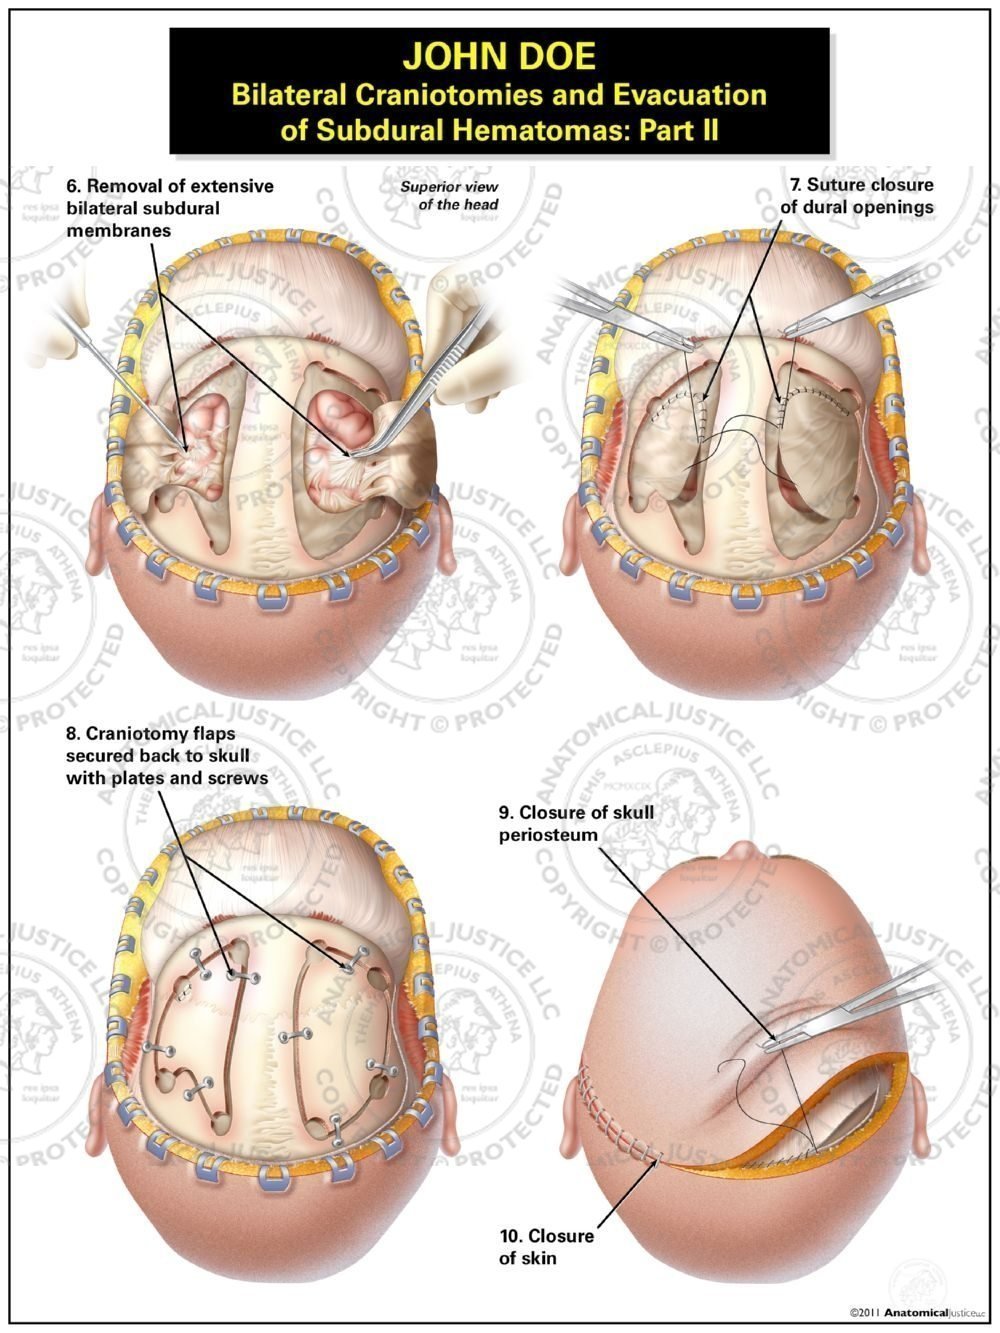 Bilateral Craniotomies and Evacuation of Subdural Hematomas: Part II